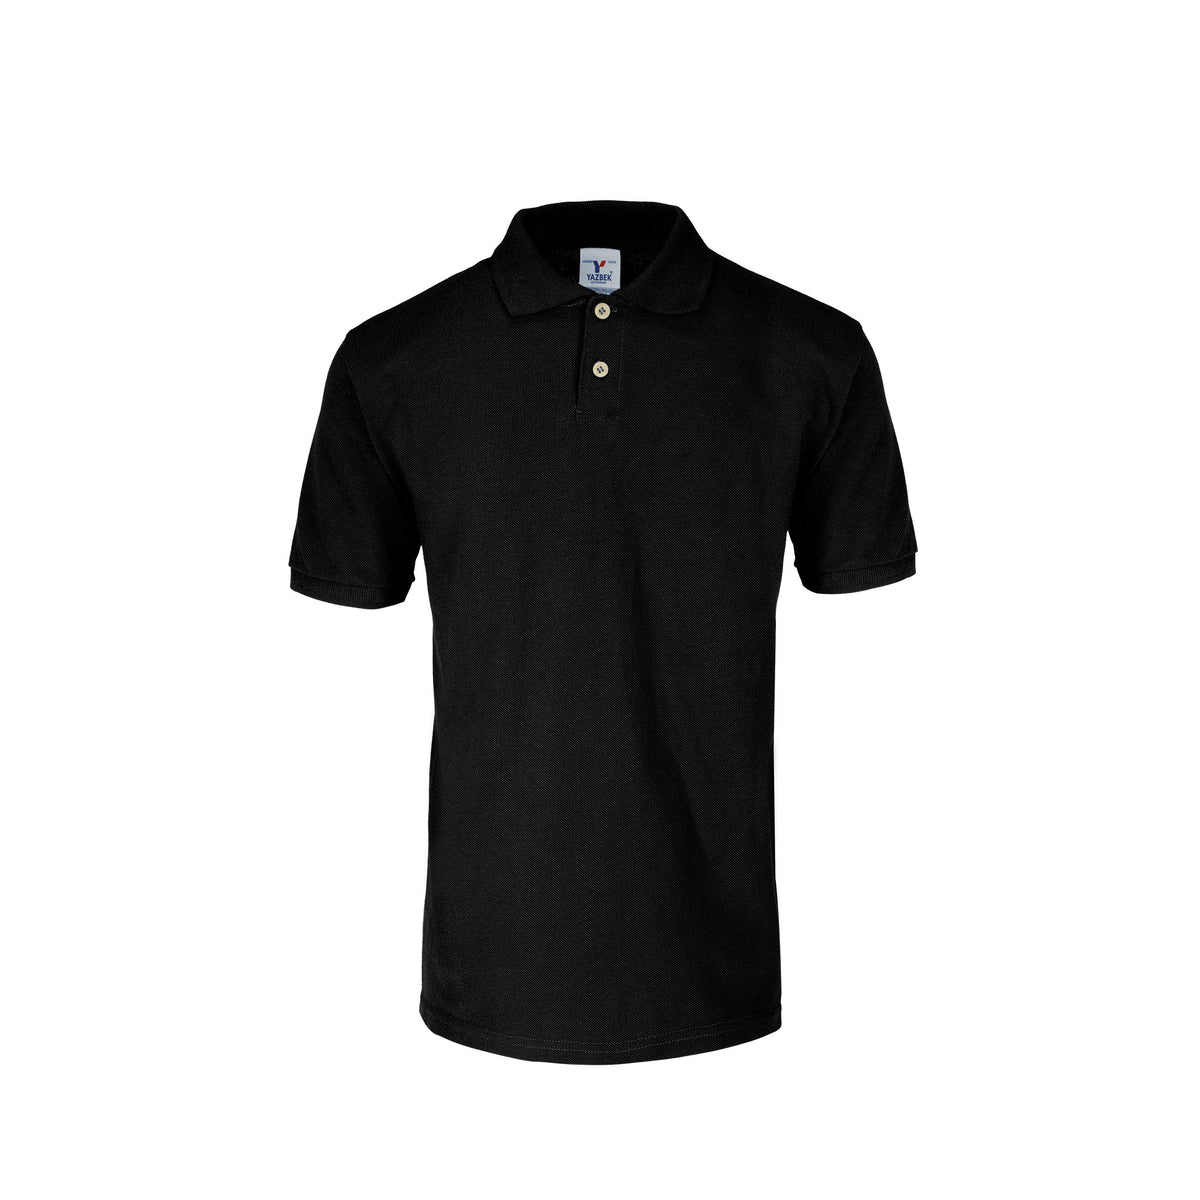 Youth’s Unisex Sport Shirt (Black) – Yazbek USA Mint